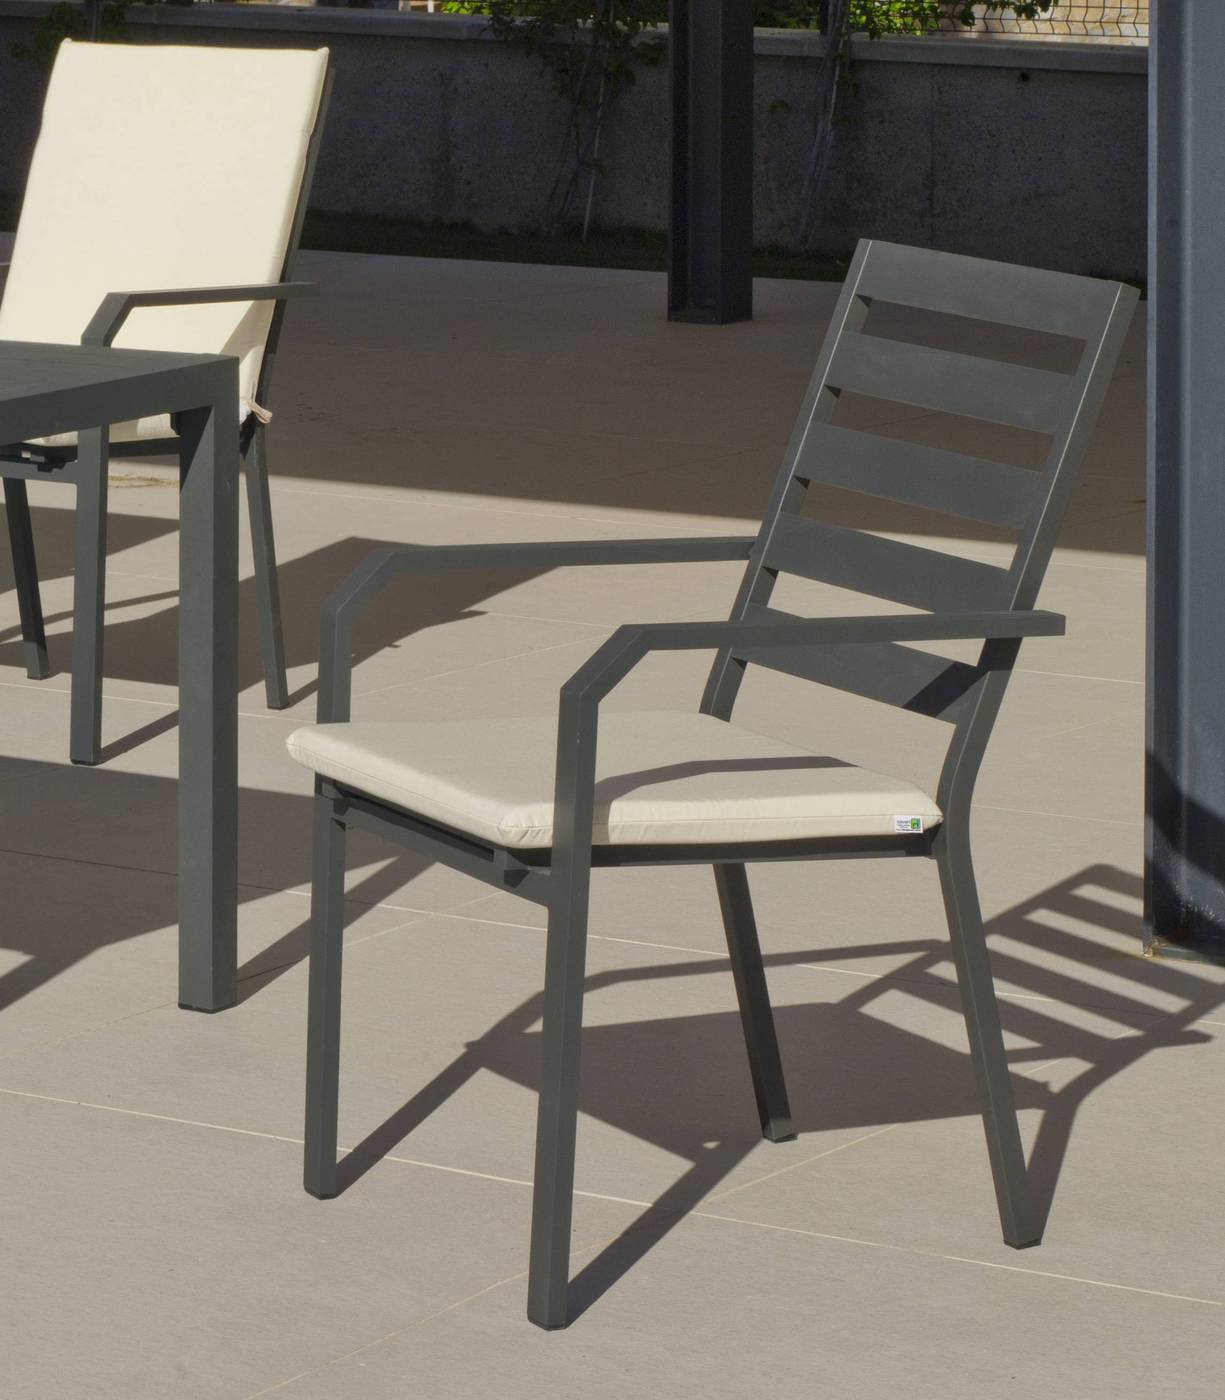 Set Aluminio Baracoa-Caravel 110-4 - Moderno conjunto de aluminio luxe: Mesa de comedor poligonal de 110 cm. + 4 sillones. Disponible en color blanco, plata y antracita.